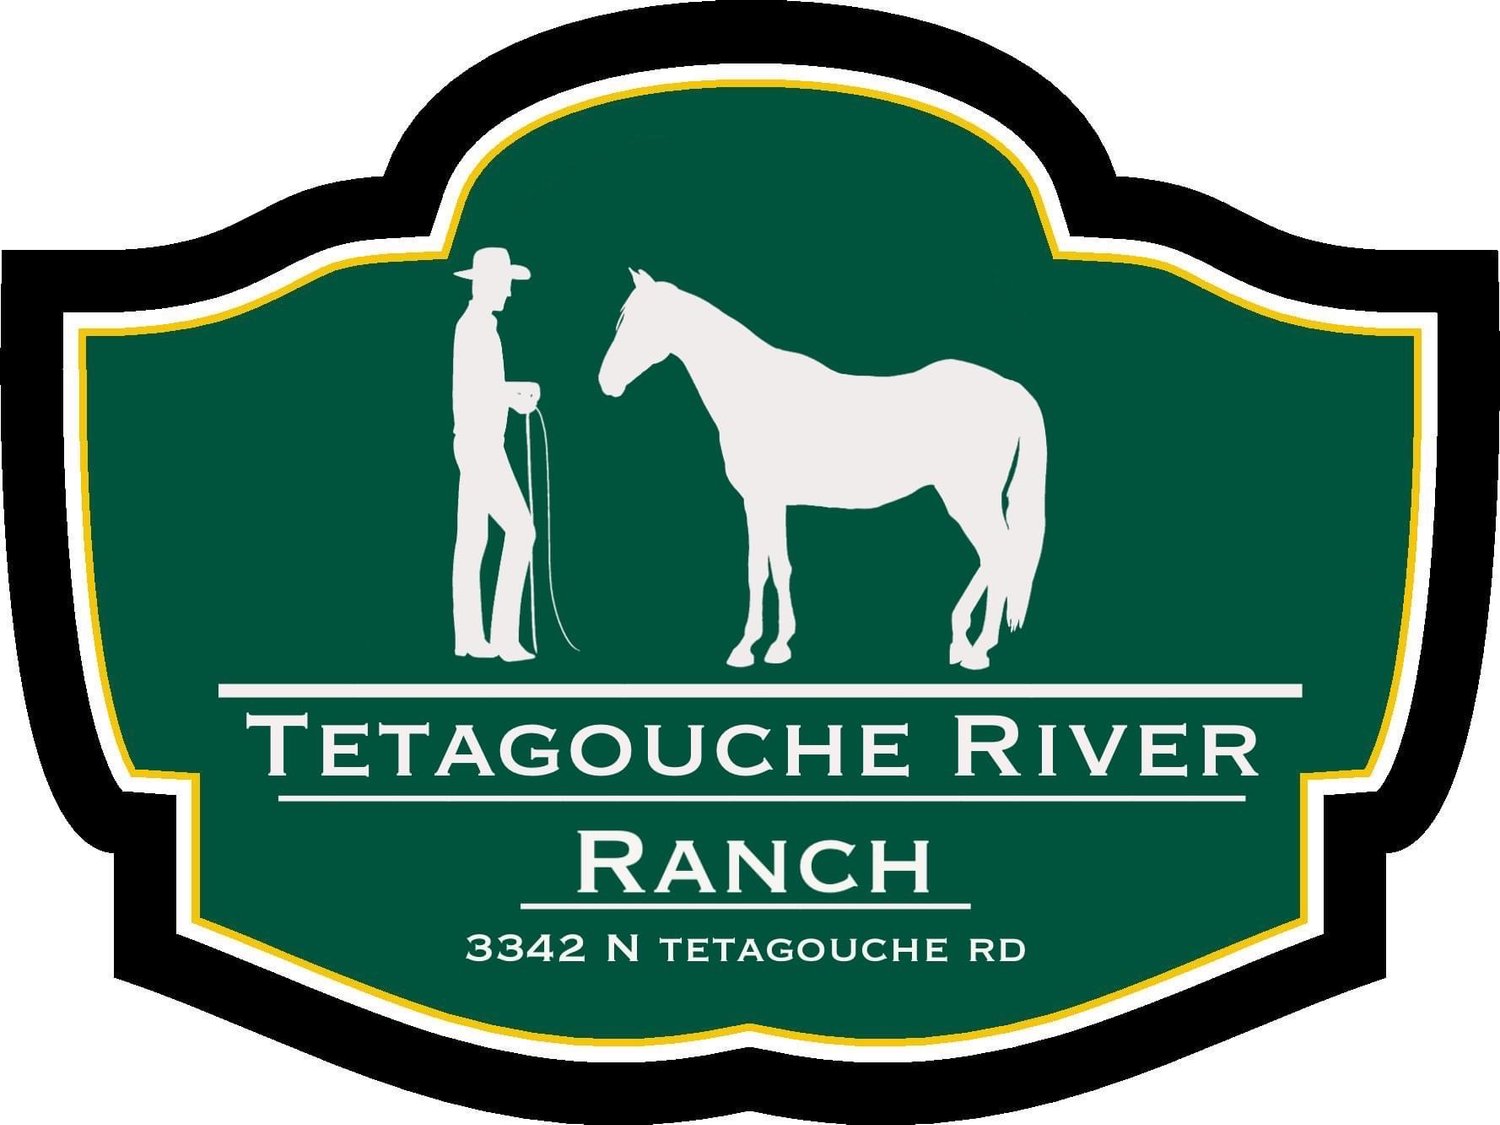 Tetagouche River Ranch